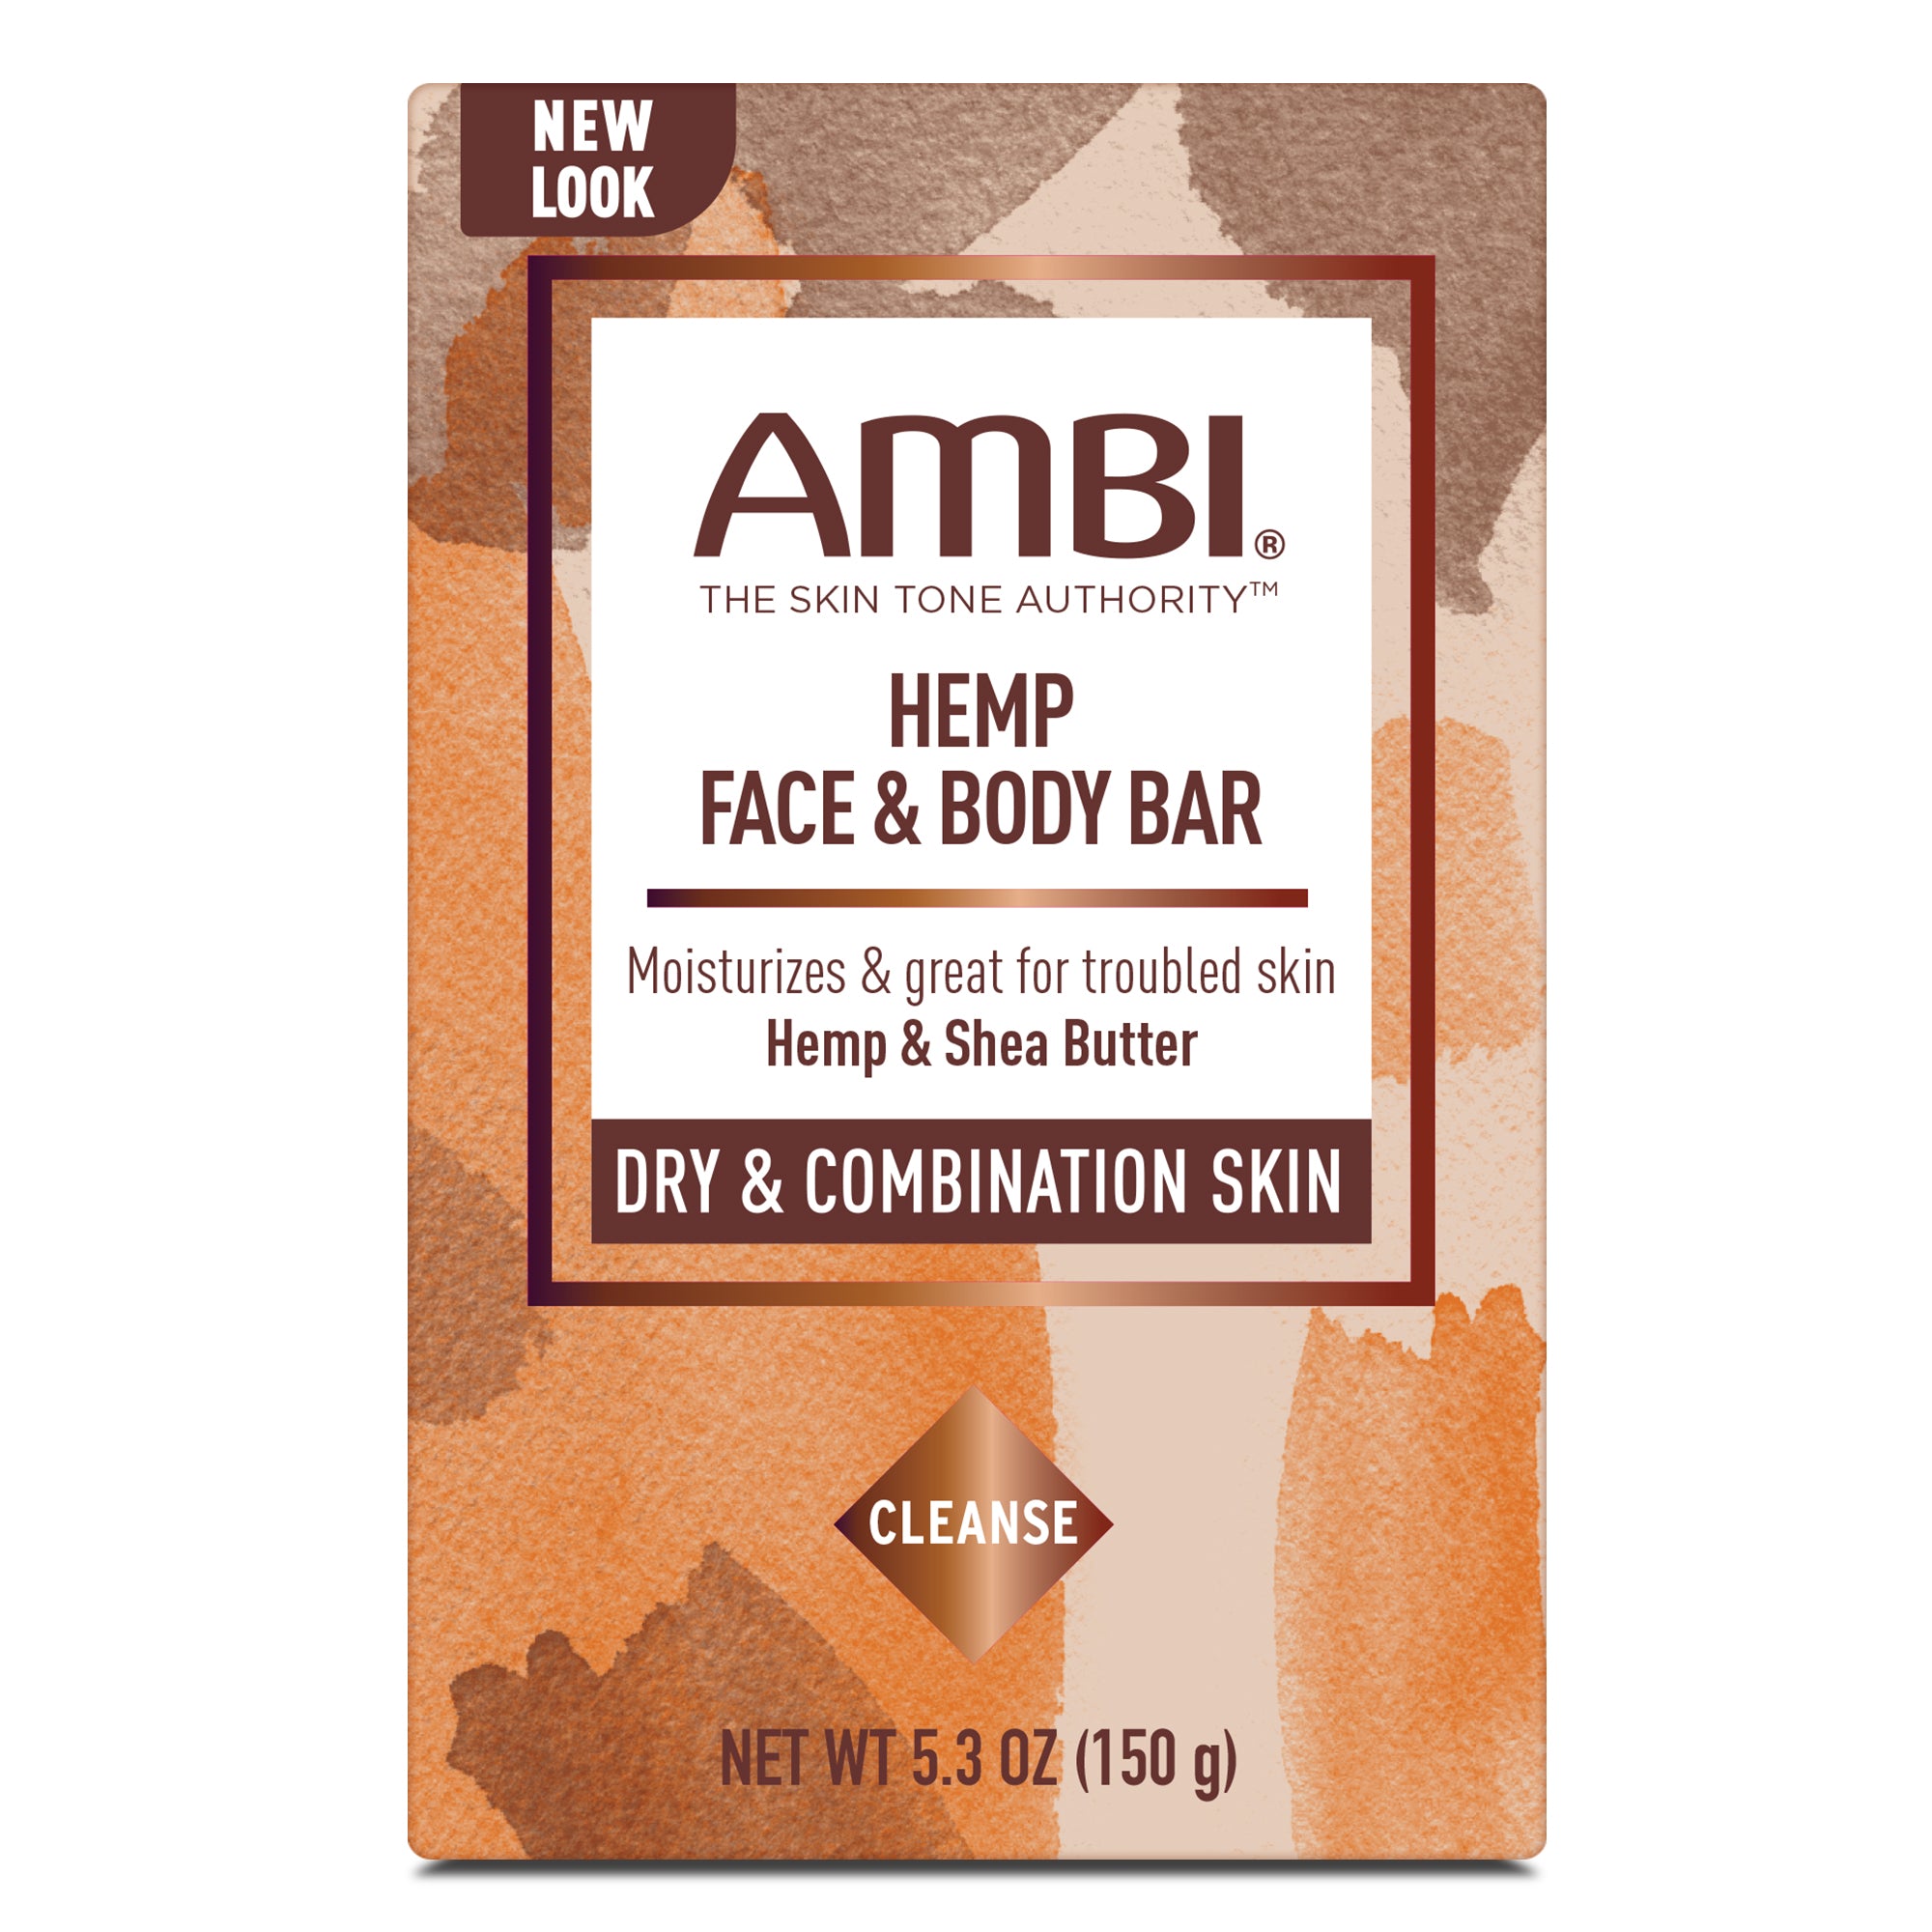 NEW! AMBI Hemp Face & Body Bar